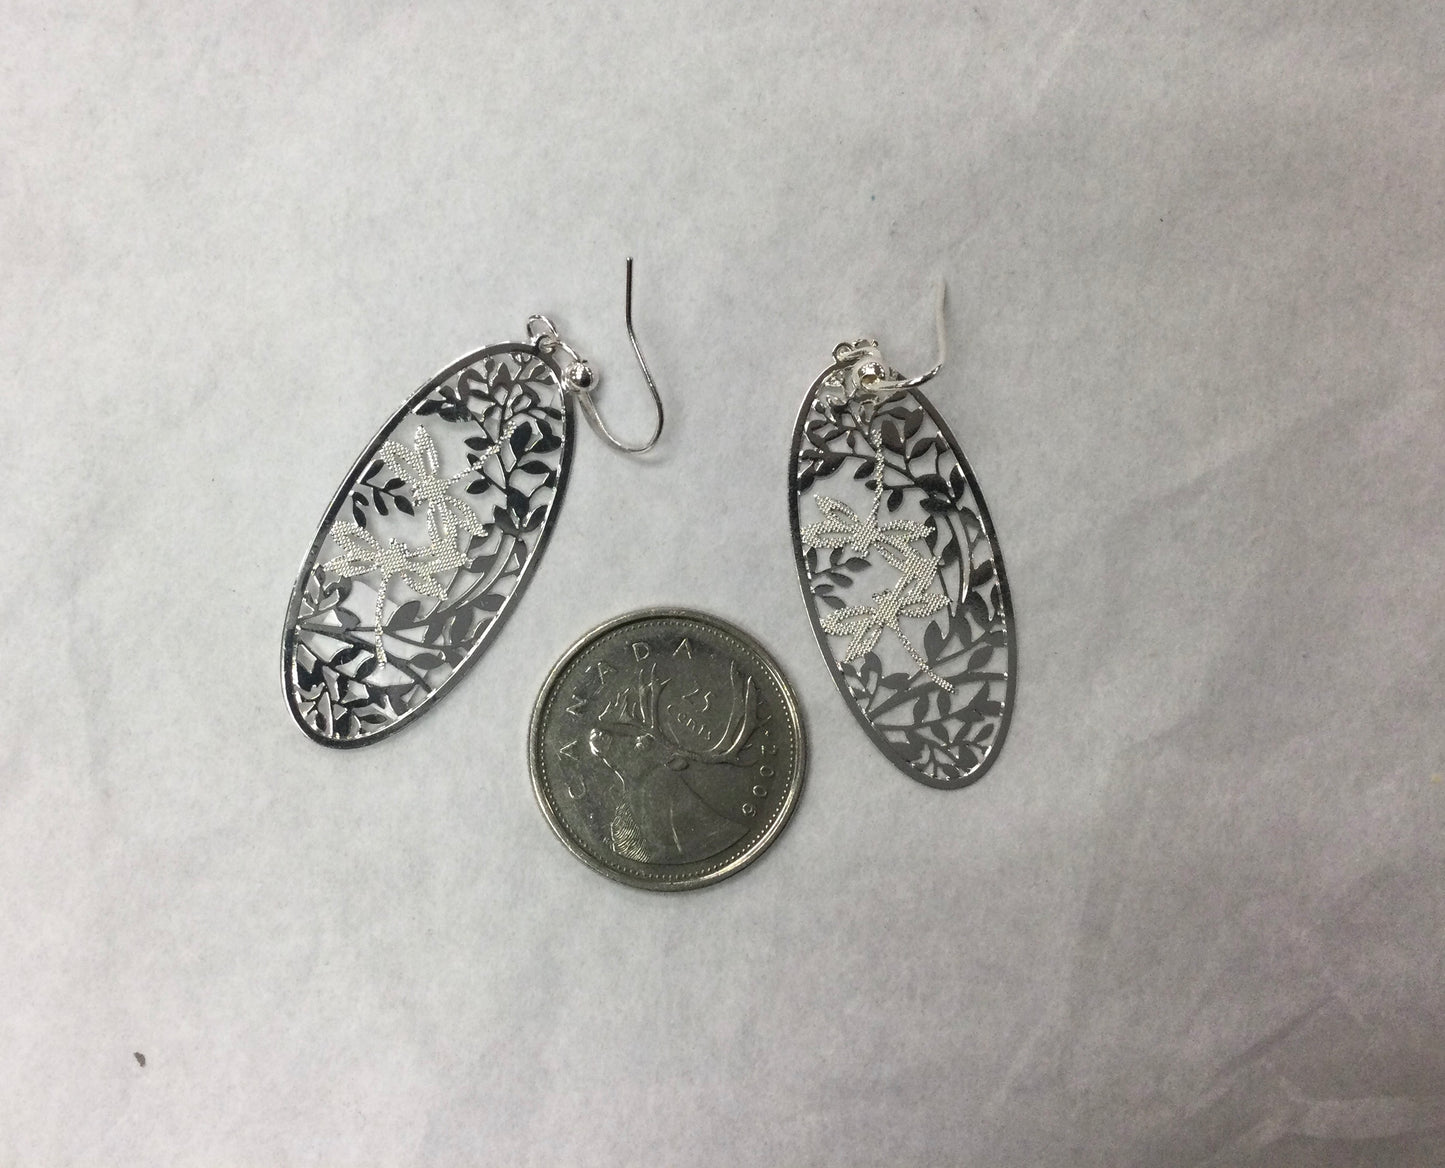 Lavishy earrings, almond shape with dragonflies